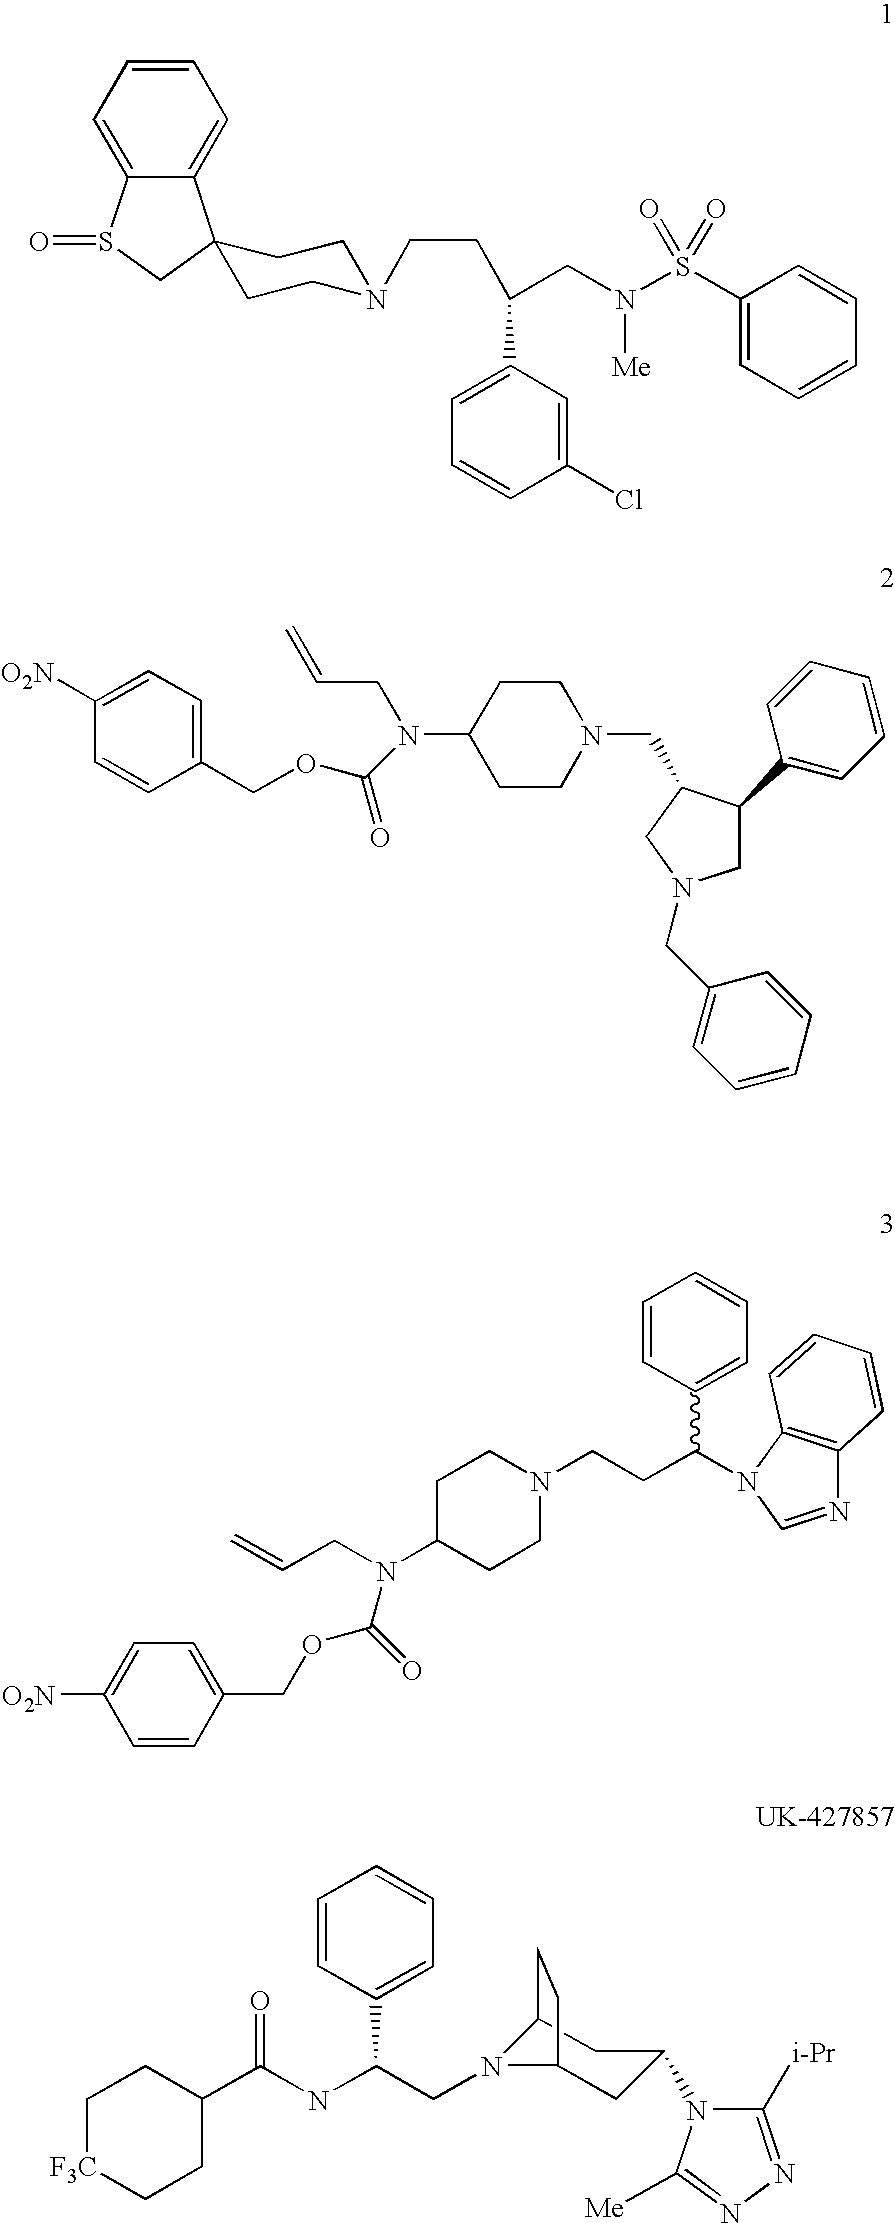 Heterocyclic antiviral compounds